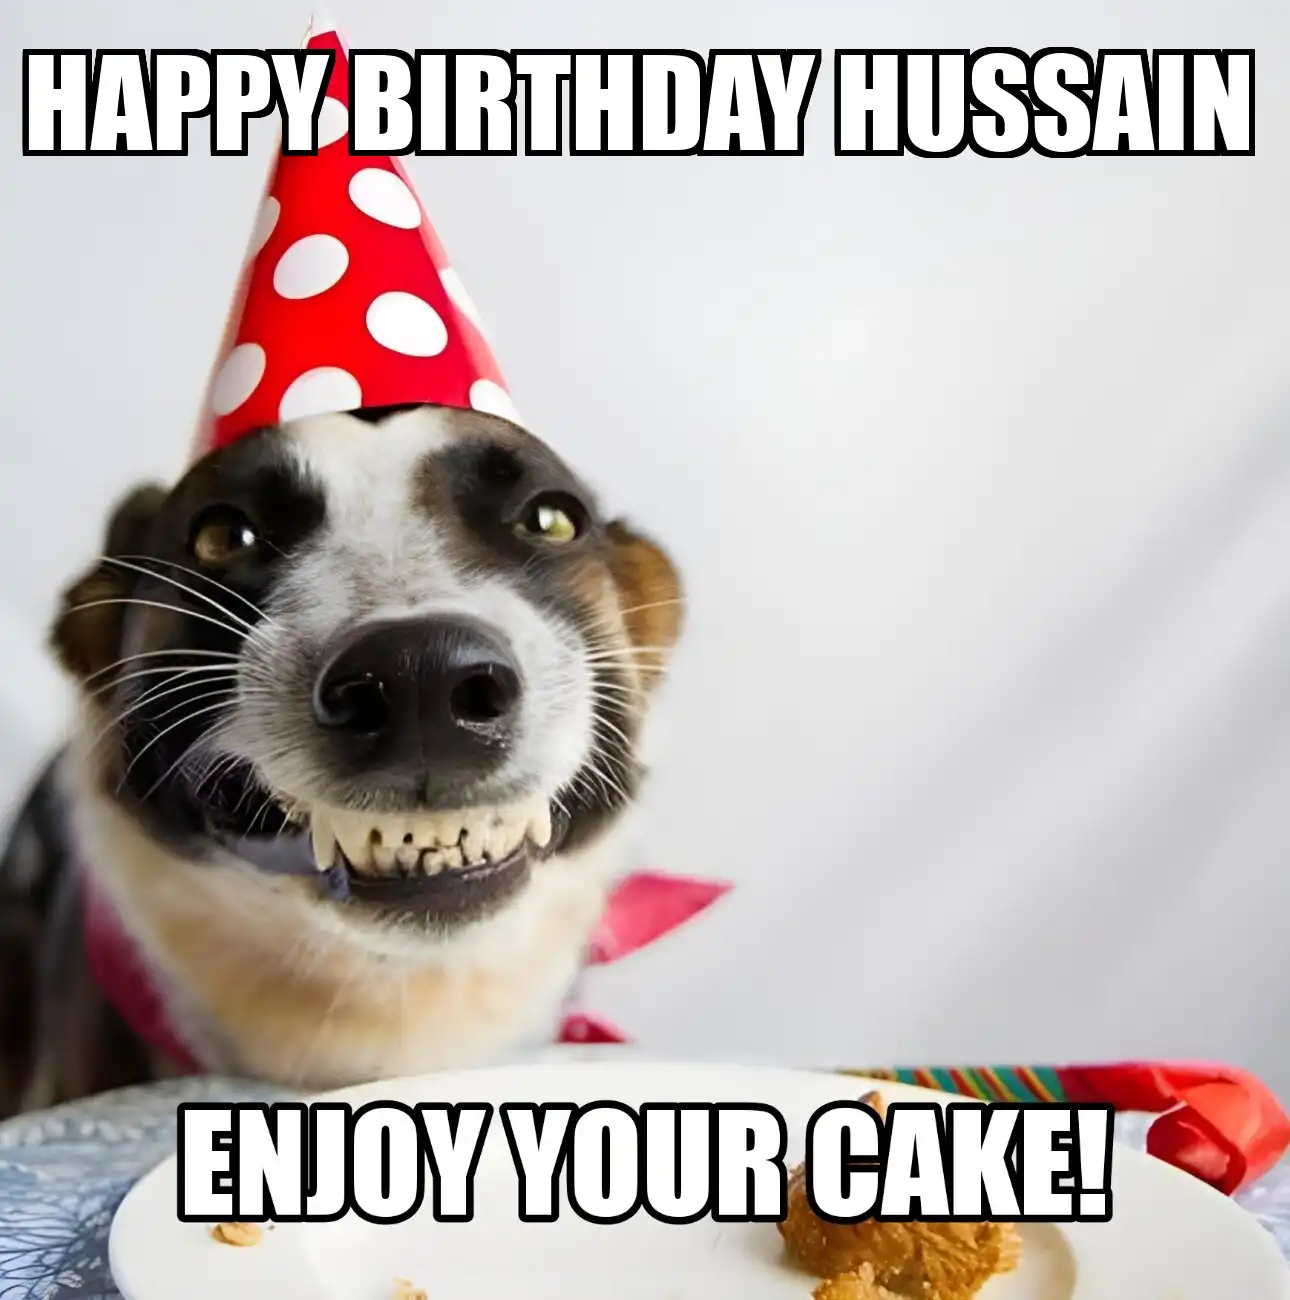 Happy Birthday Hussain Enjoy Your Cake Dog Meme